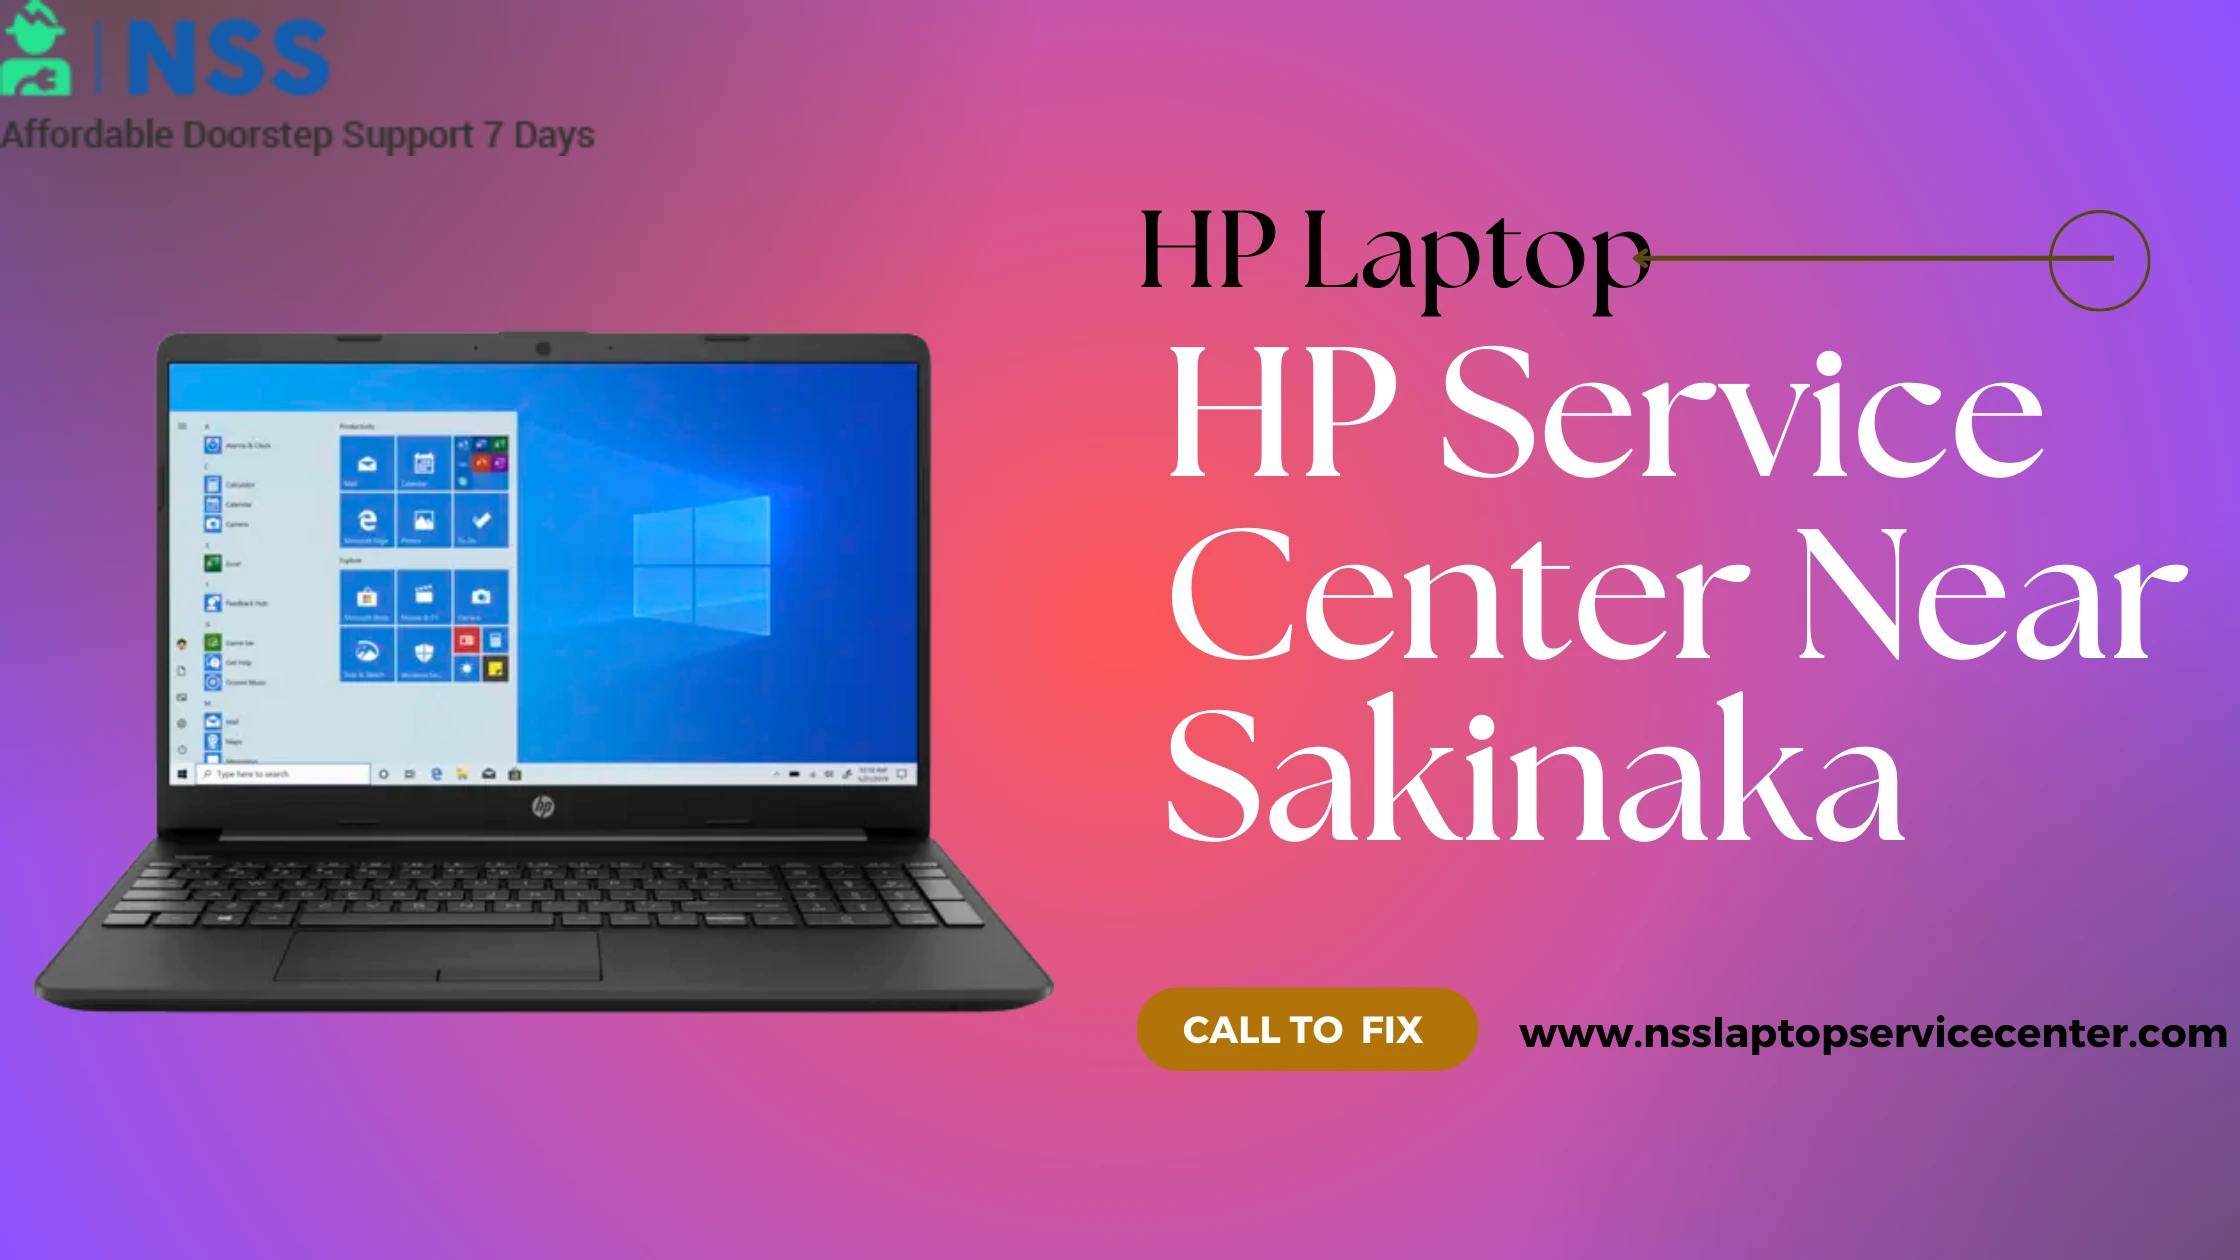 Are You Looking HP Service Center Near Sakinaka, Mumbai